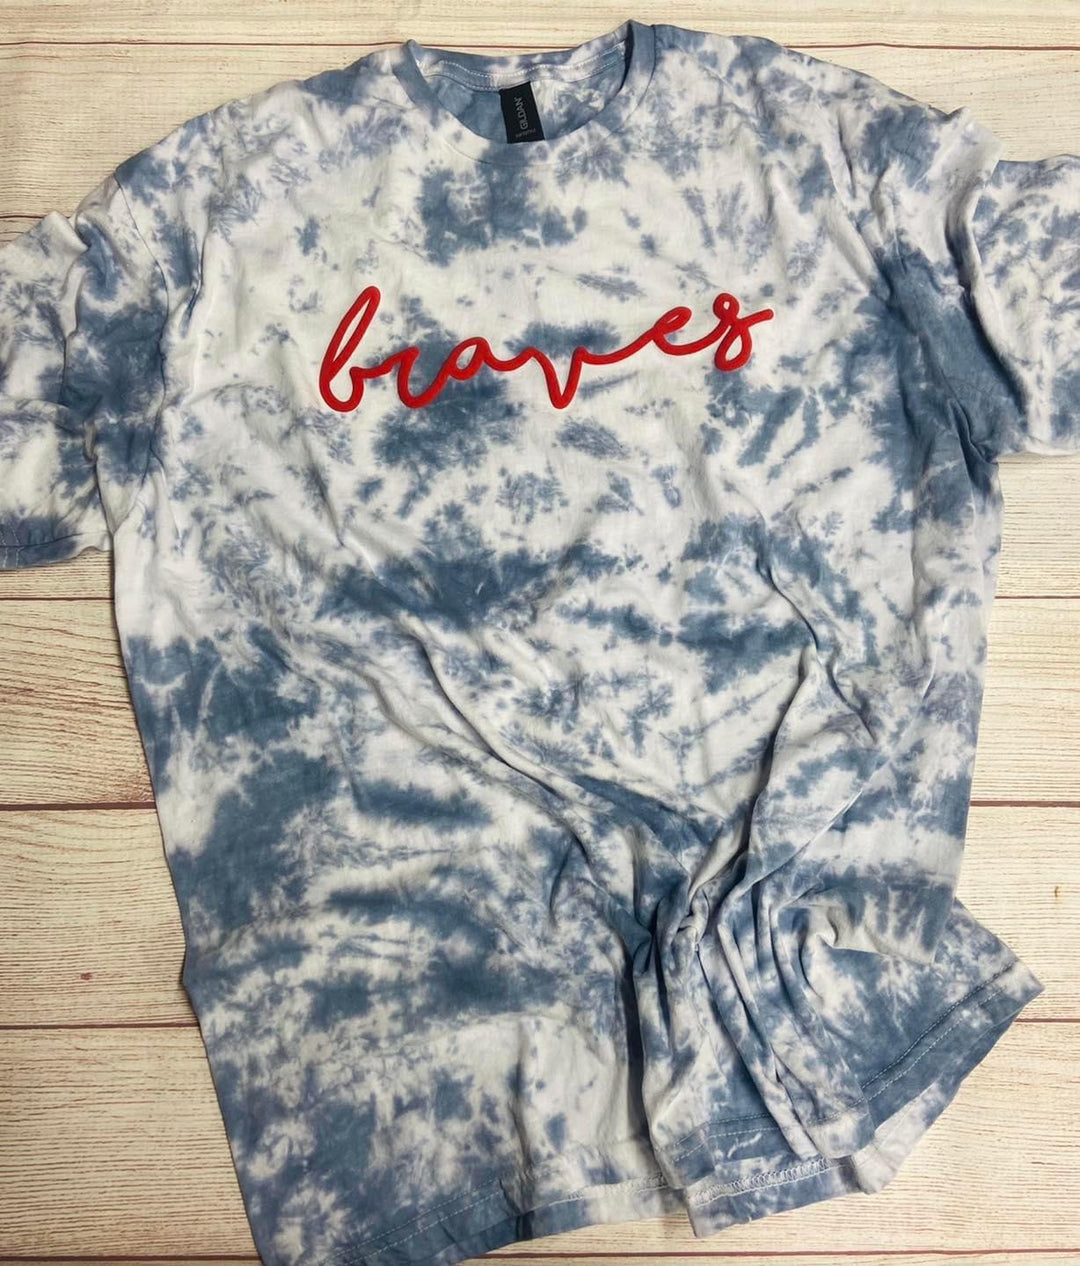 Braves Puff Shirt